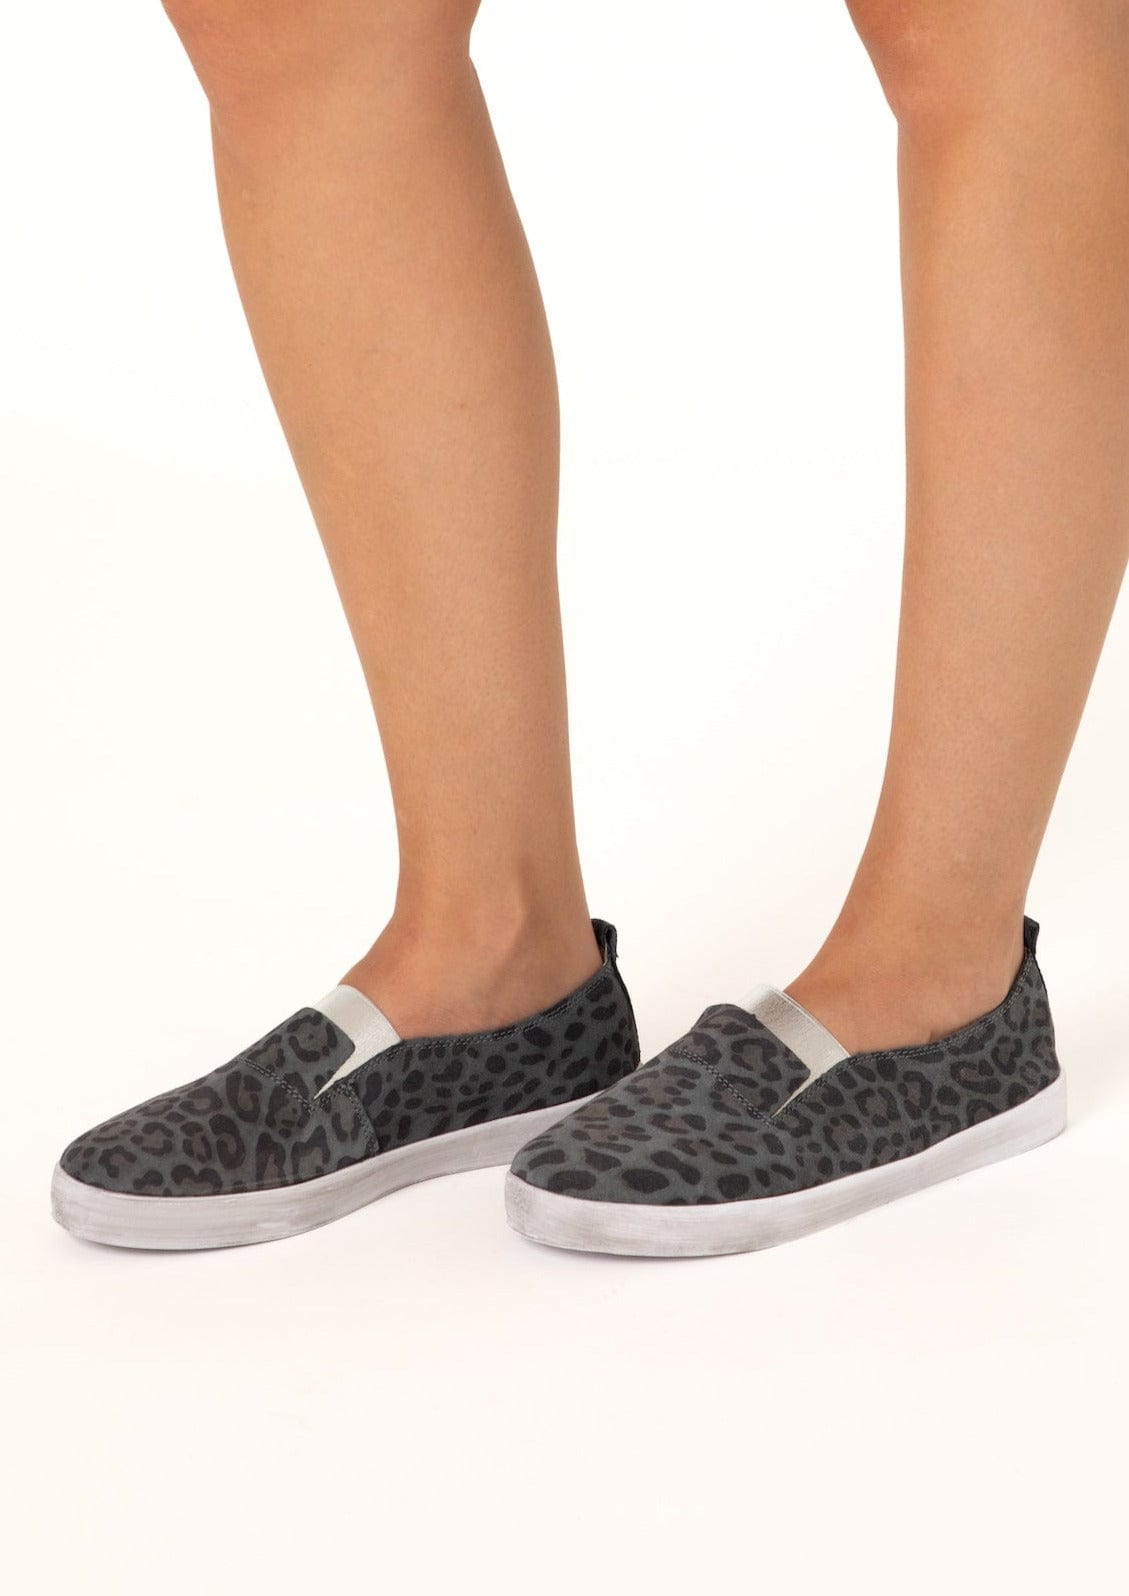 Fran Leather Slip on Sneaker in Grey Leopard Print - Tribute StoreJulz